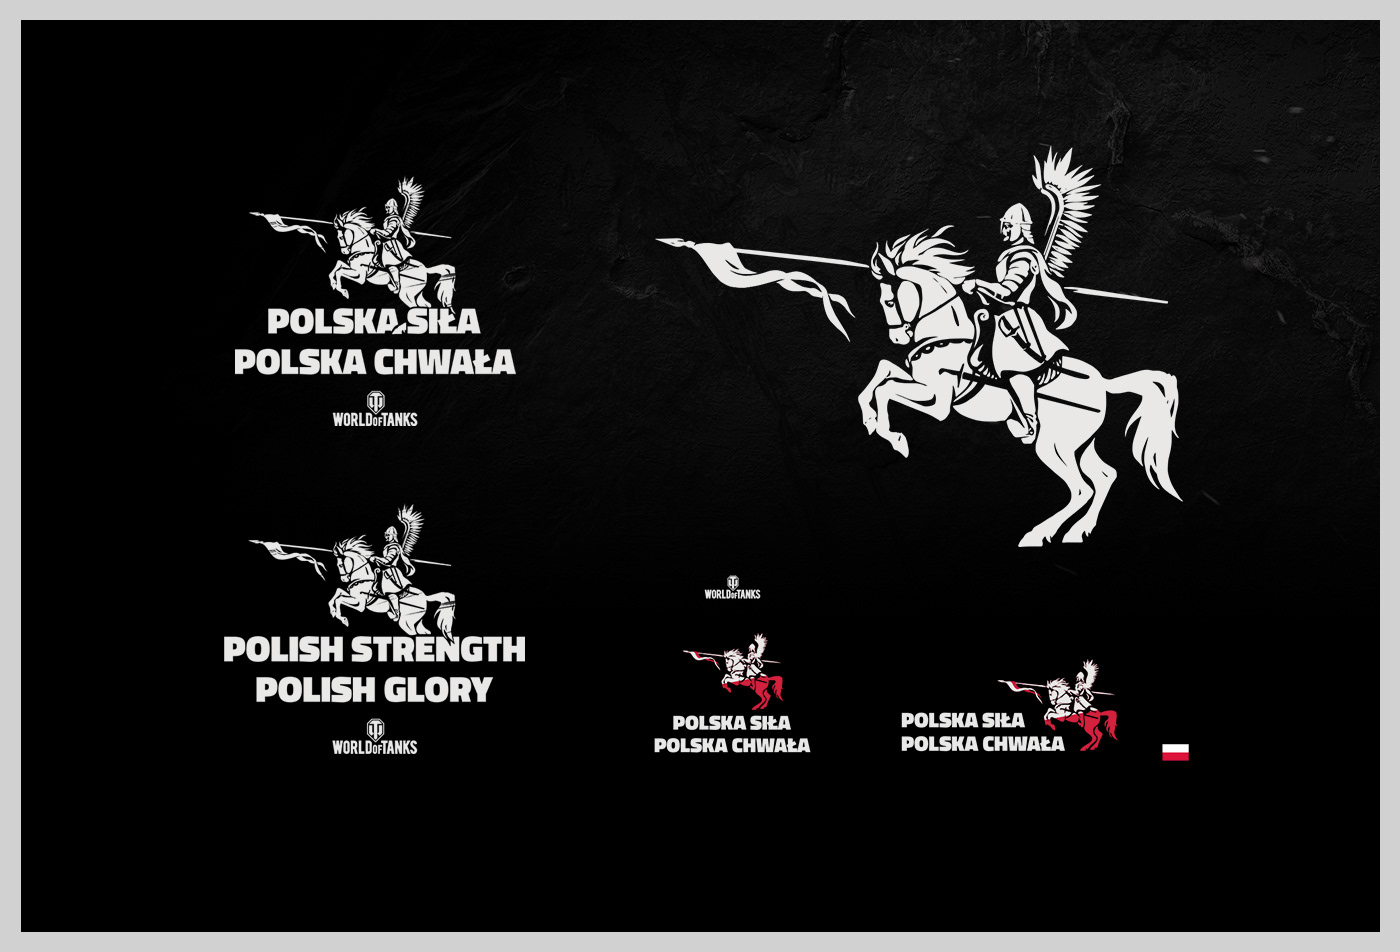 polska siła world of tanks 0.s.t.r. Żywiołak polish music art direction  partnerships collaborations branding  logo